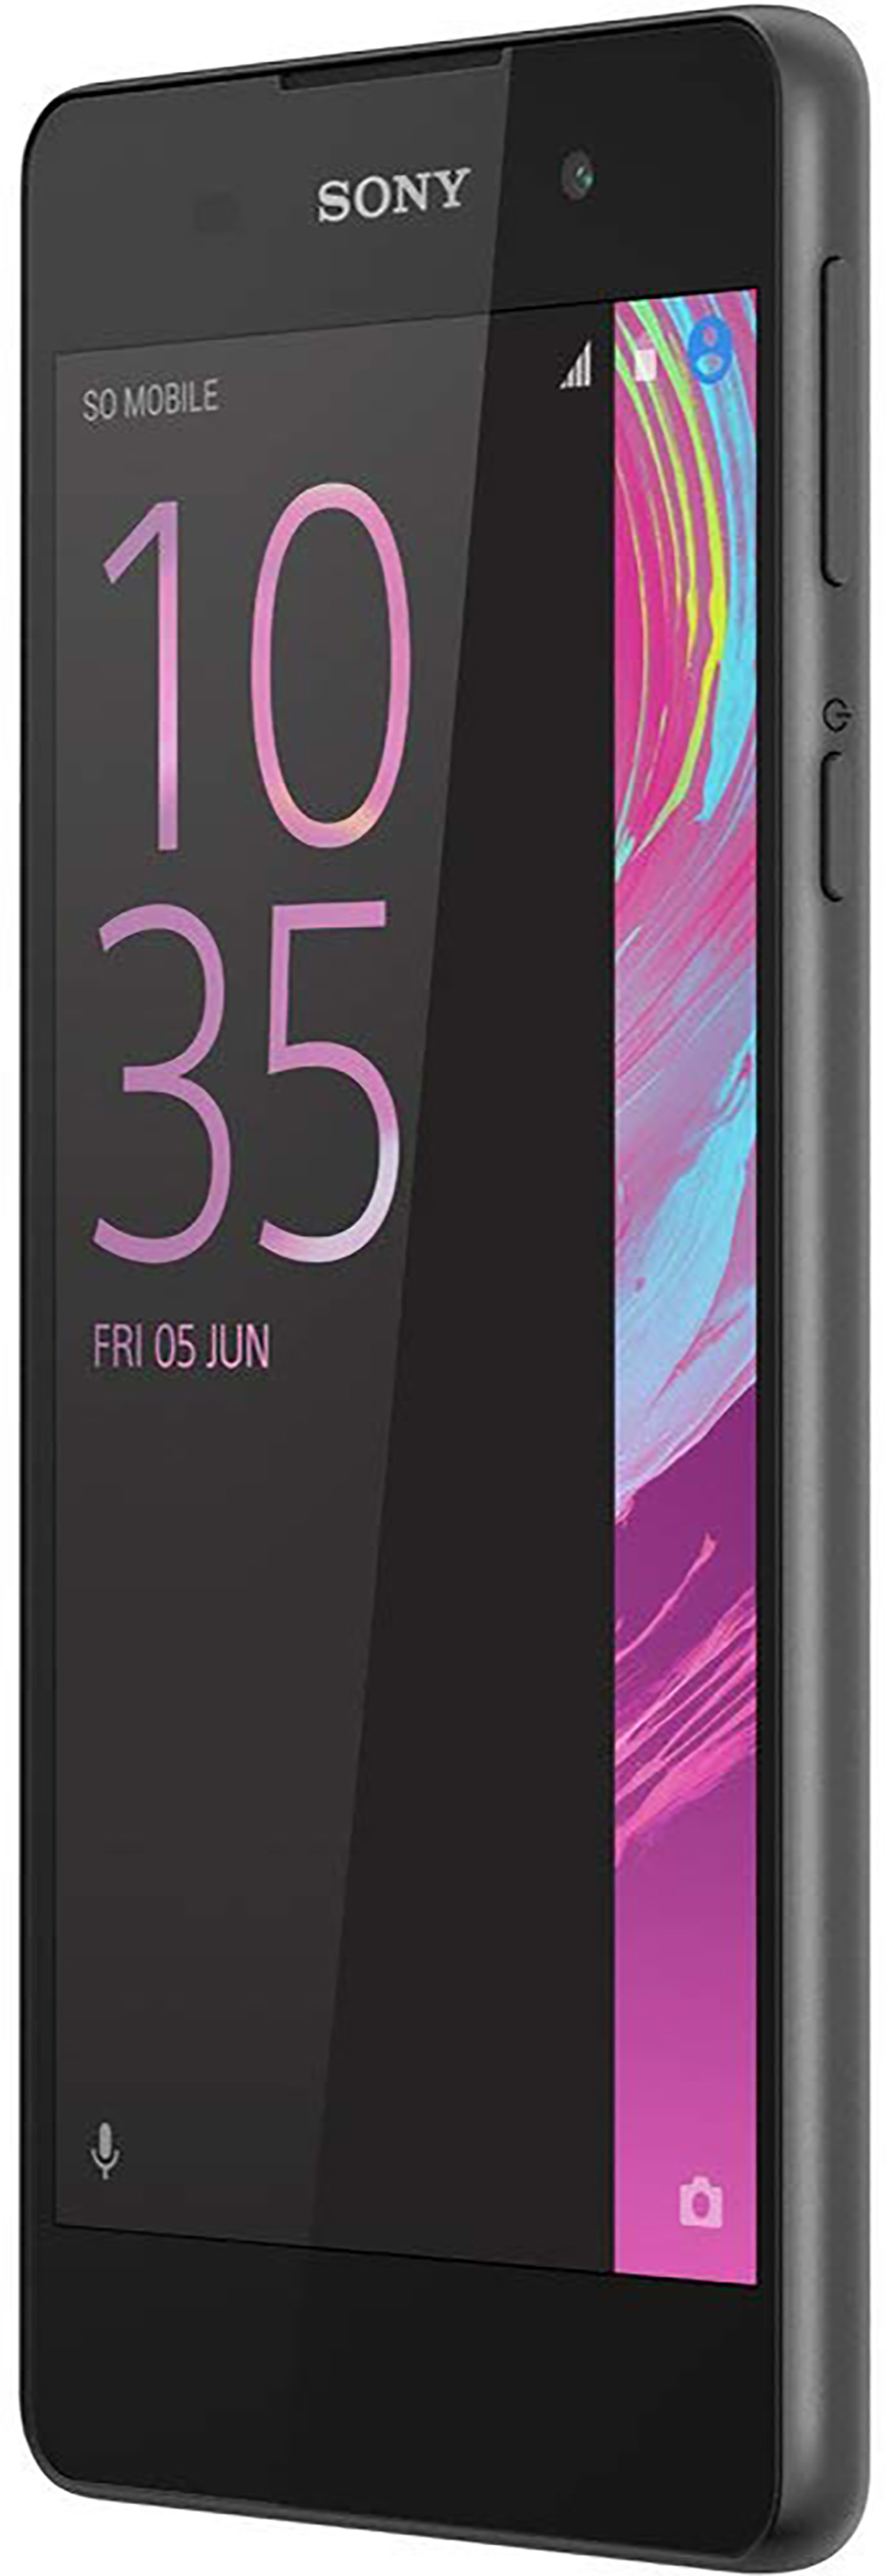 Sony Xperia E5 F3313 16GB Unlocked GSM 4G LTE Phone w/ 13MP Camera - Black - image 4 of 4